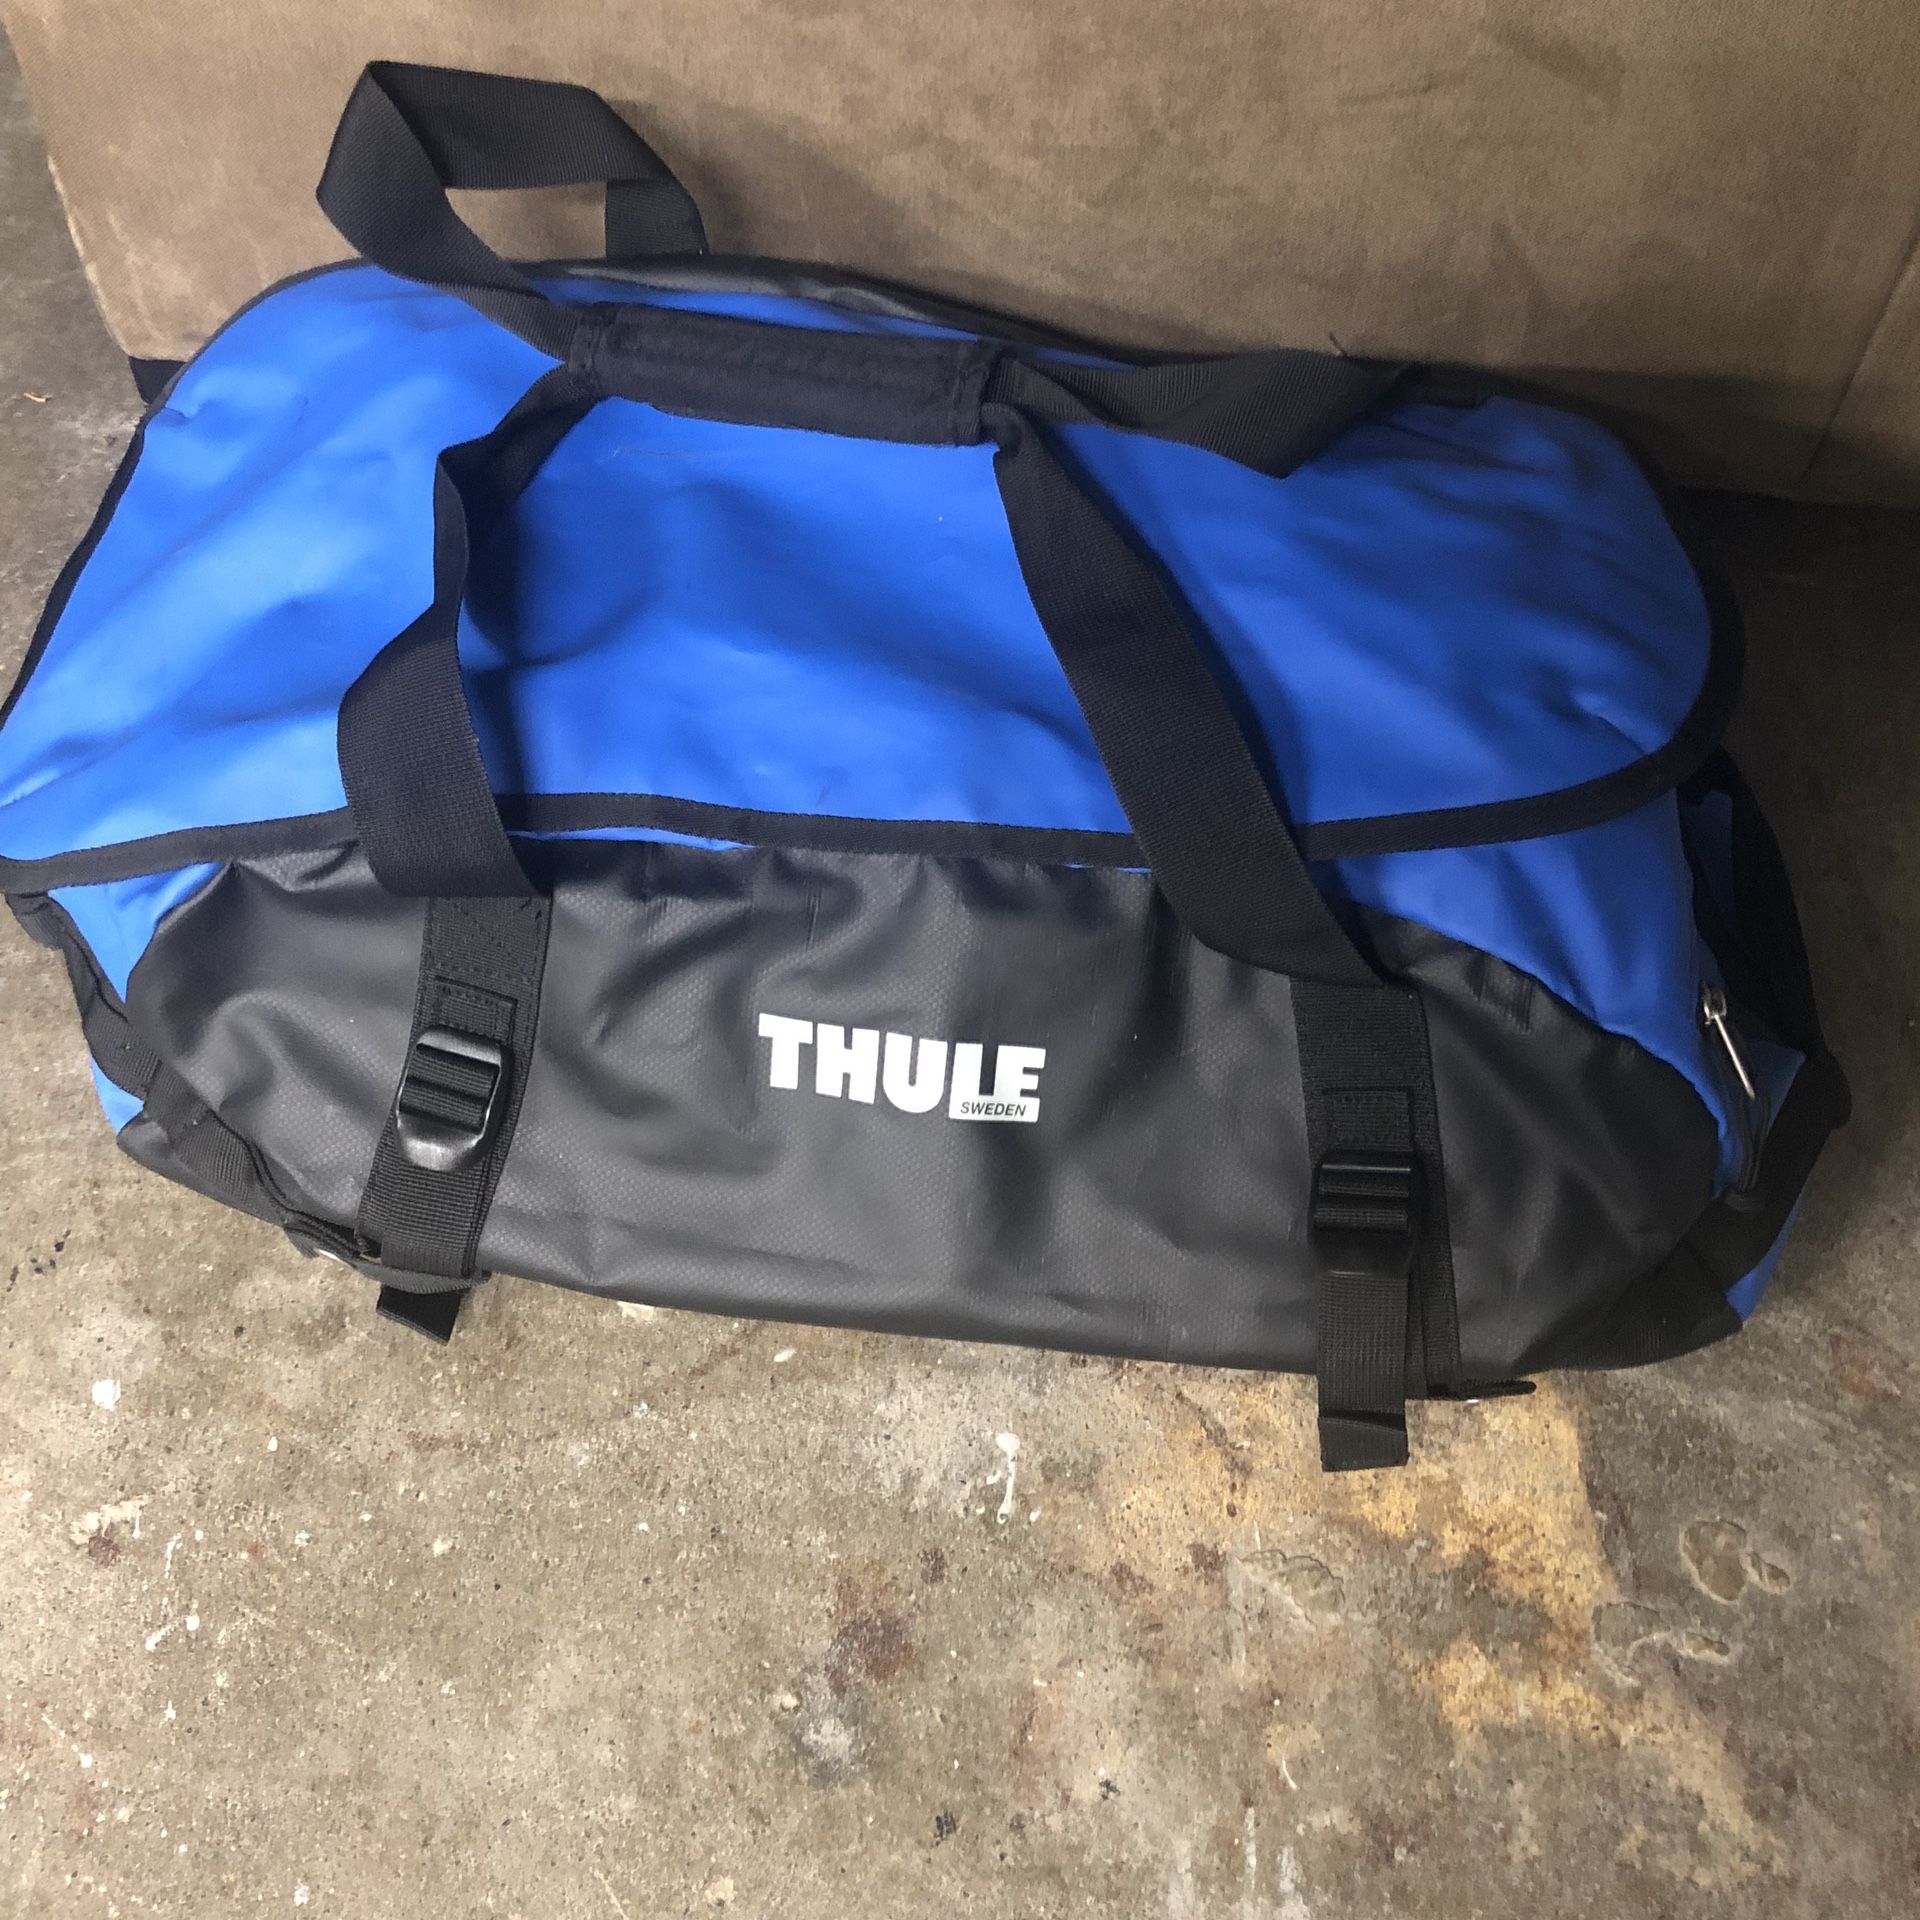 Thule duffle bag